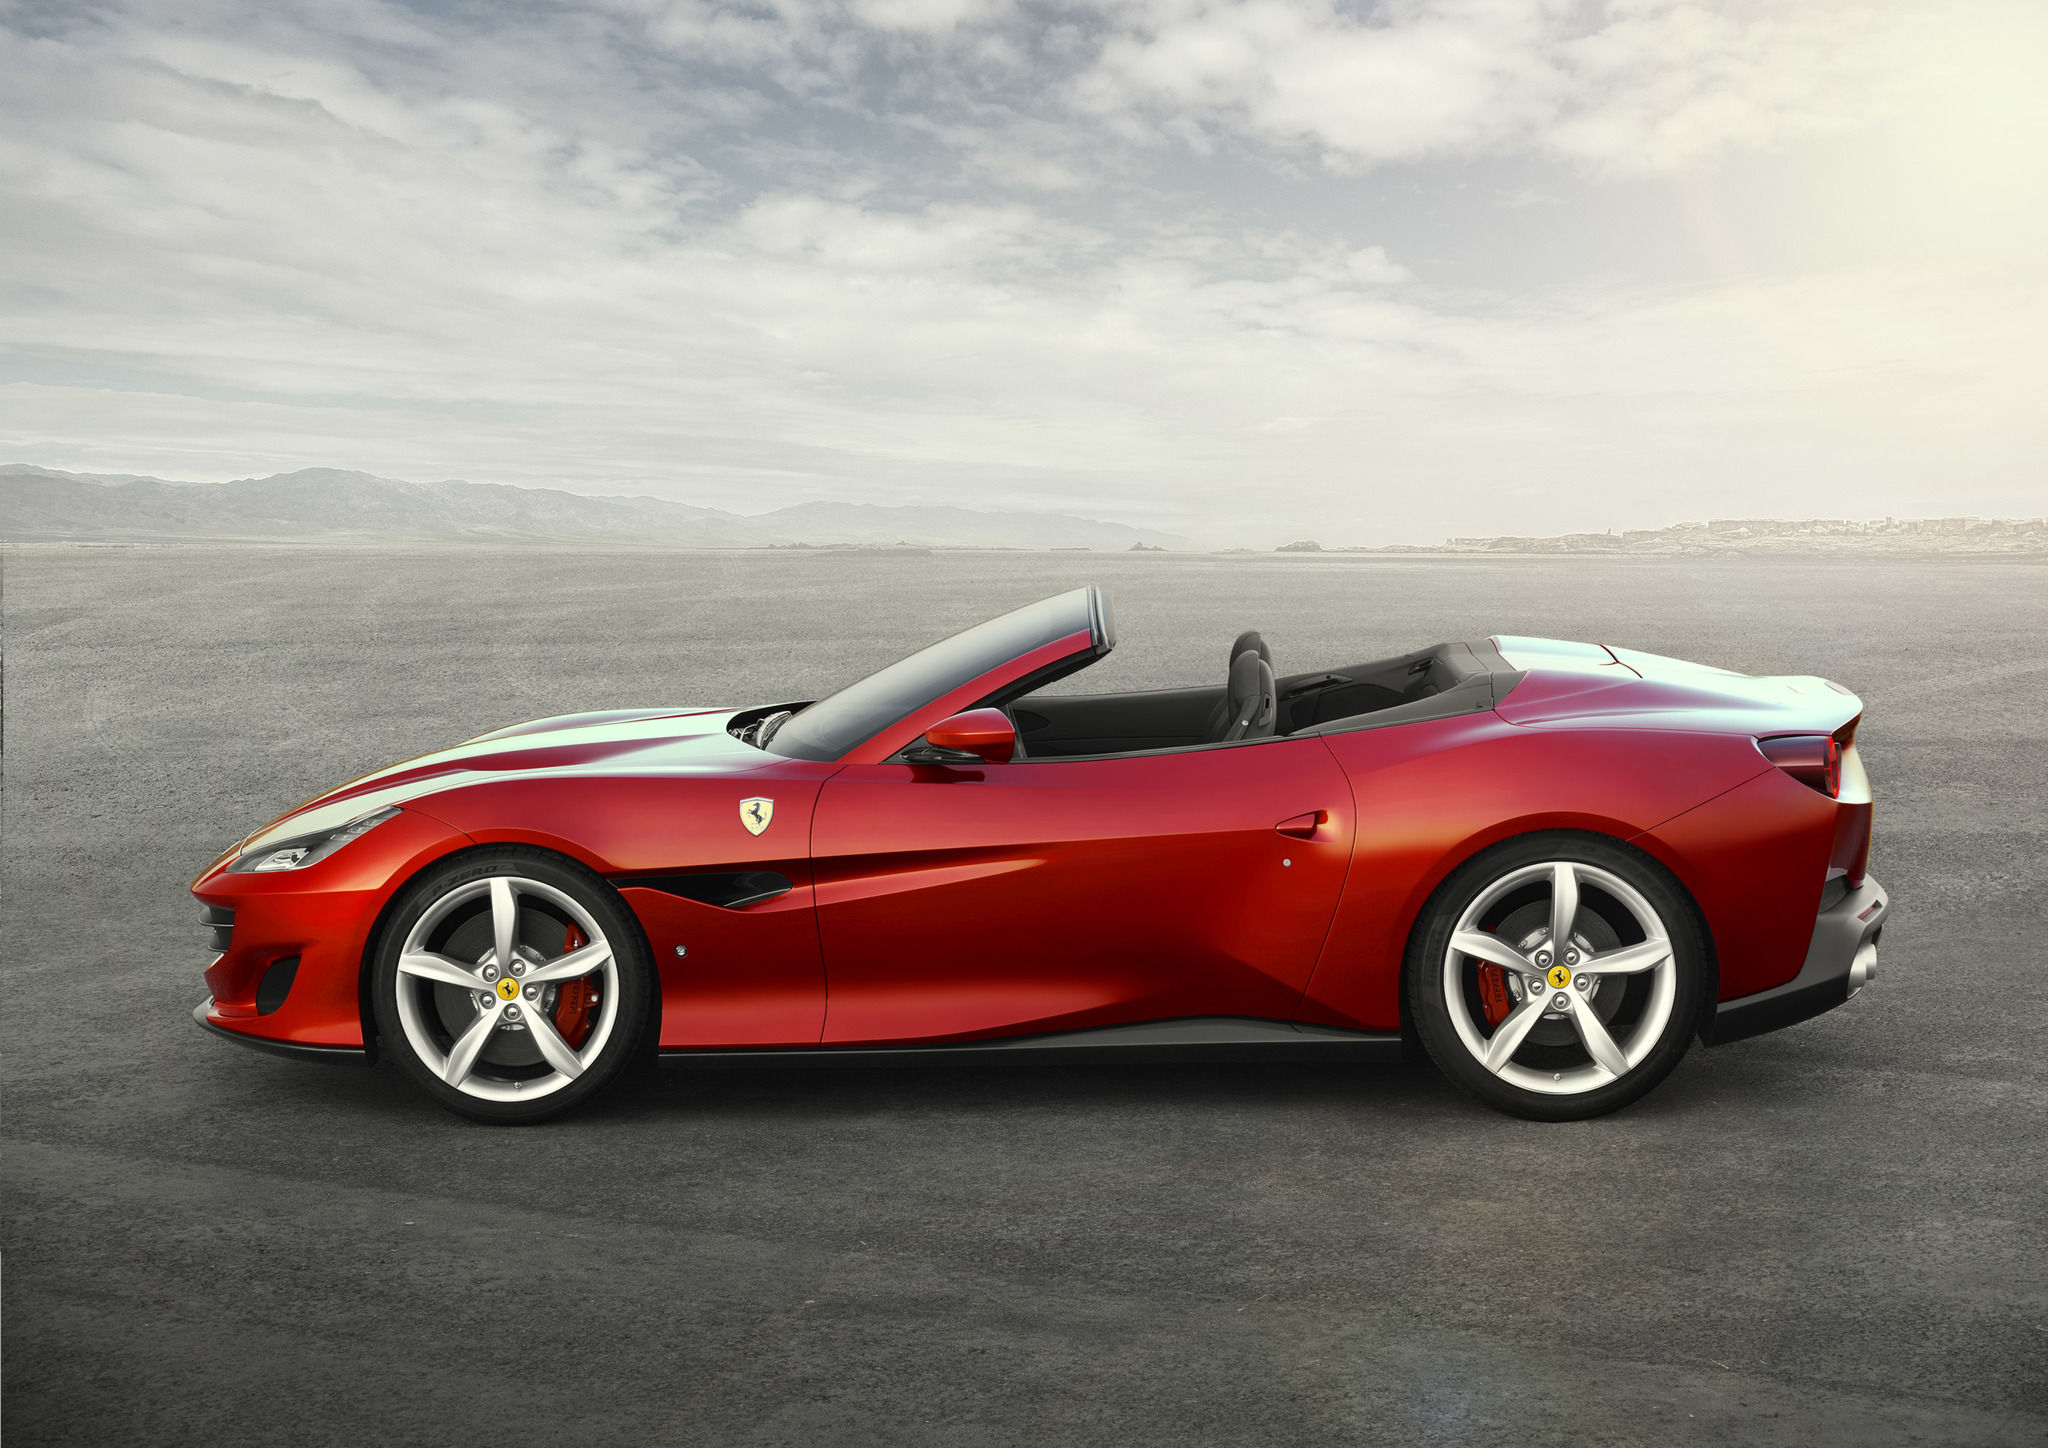 The Ferrari Portofino is finally hitting the road in KL